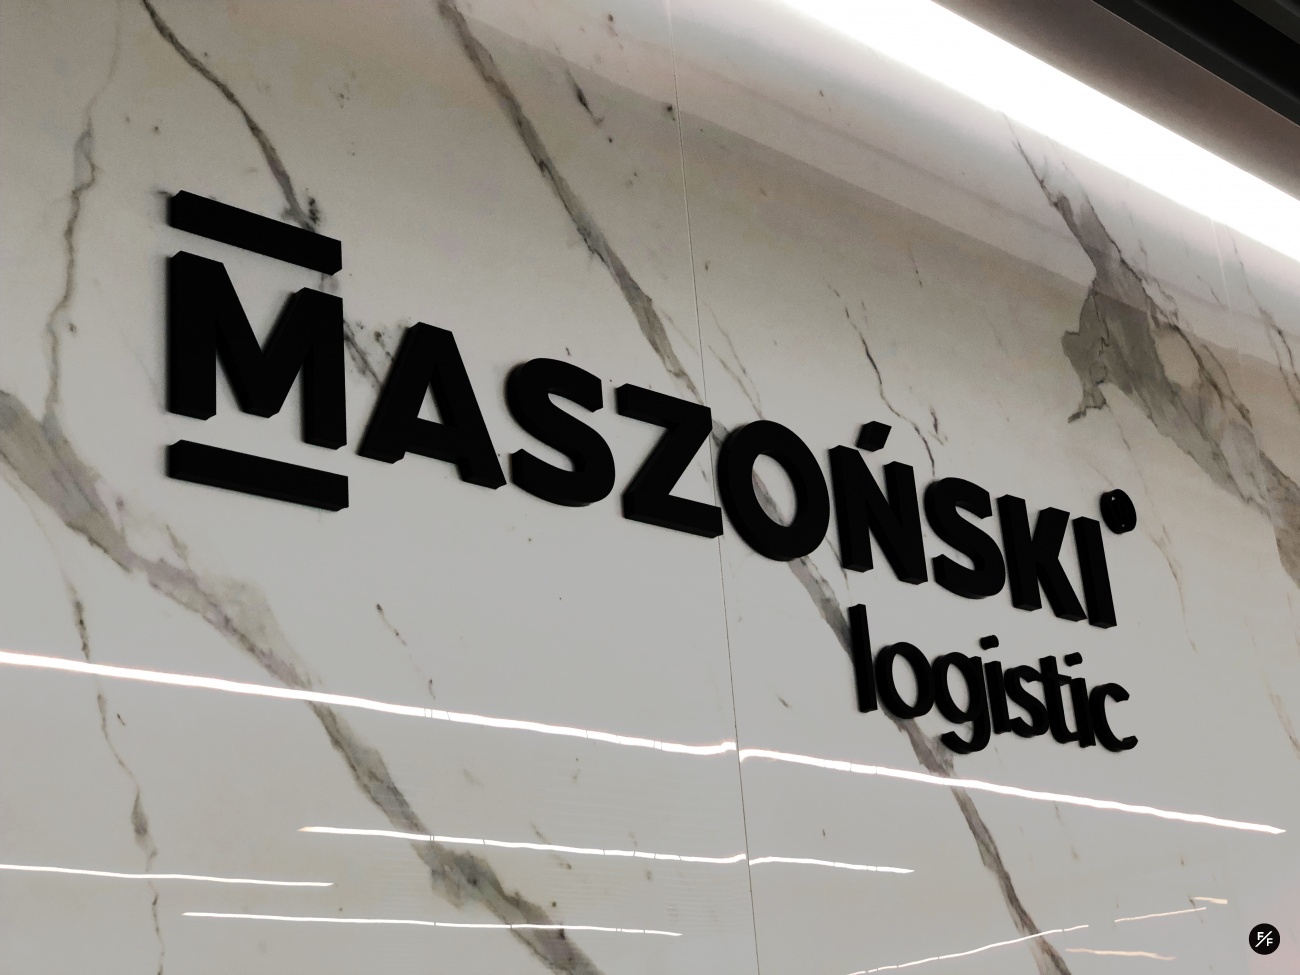 Maszoński Logistic